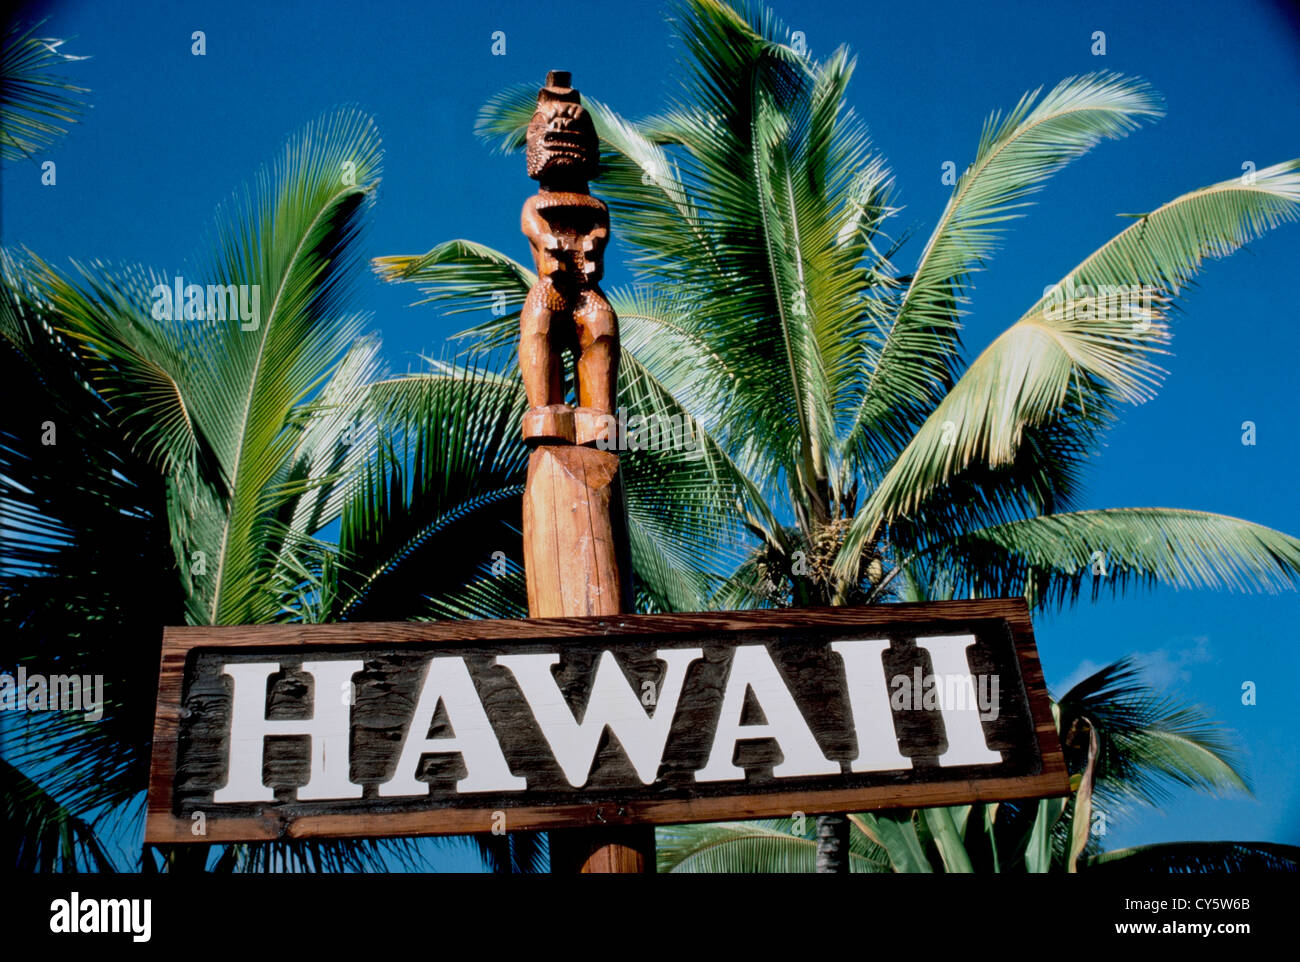 HAWAII SIGN Stock Photo